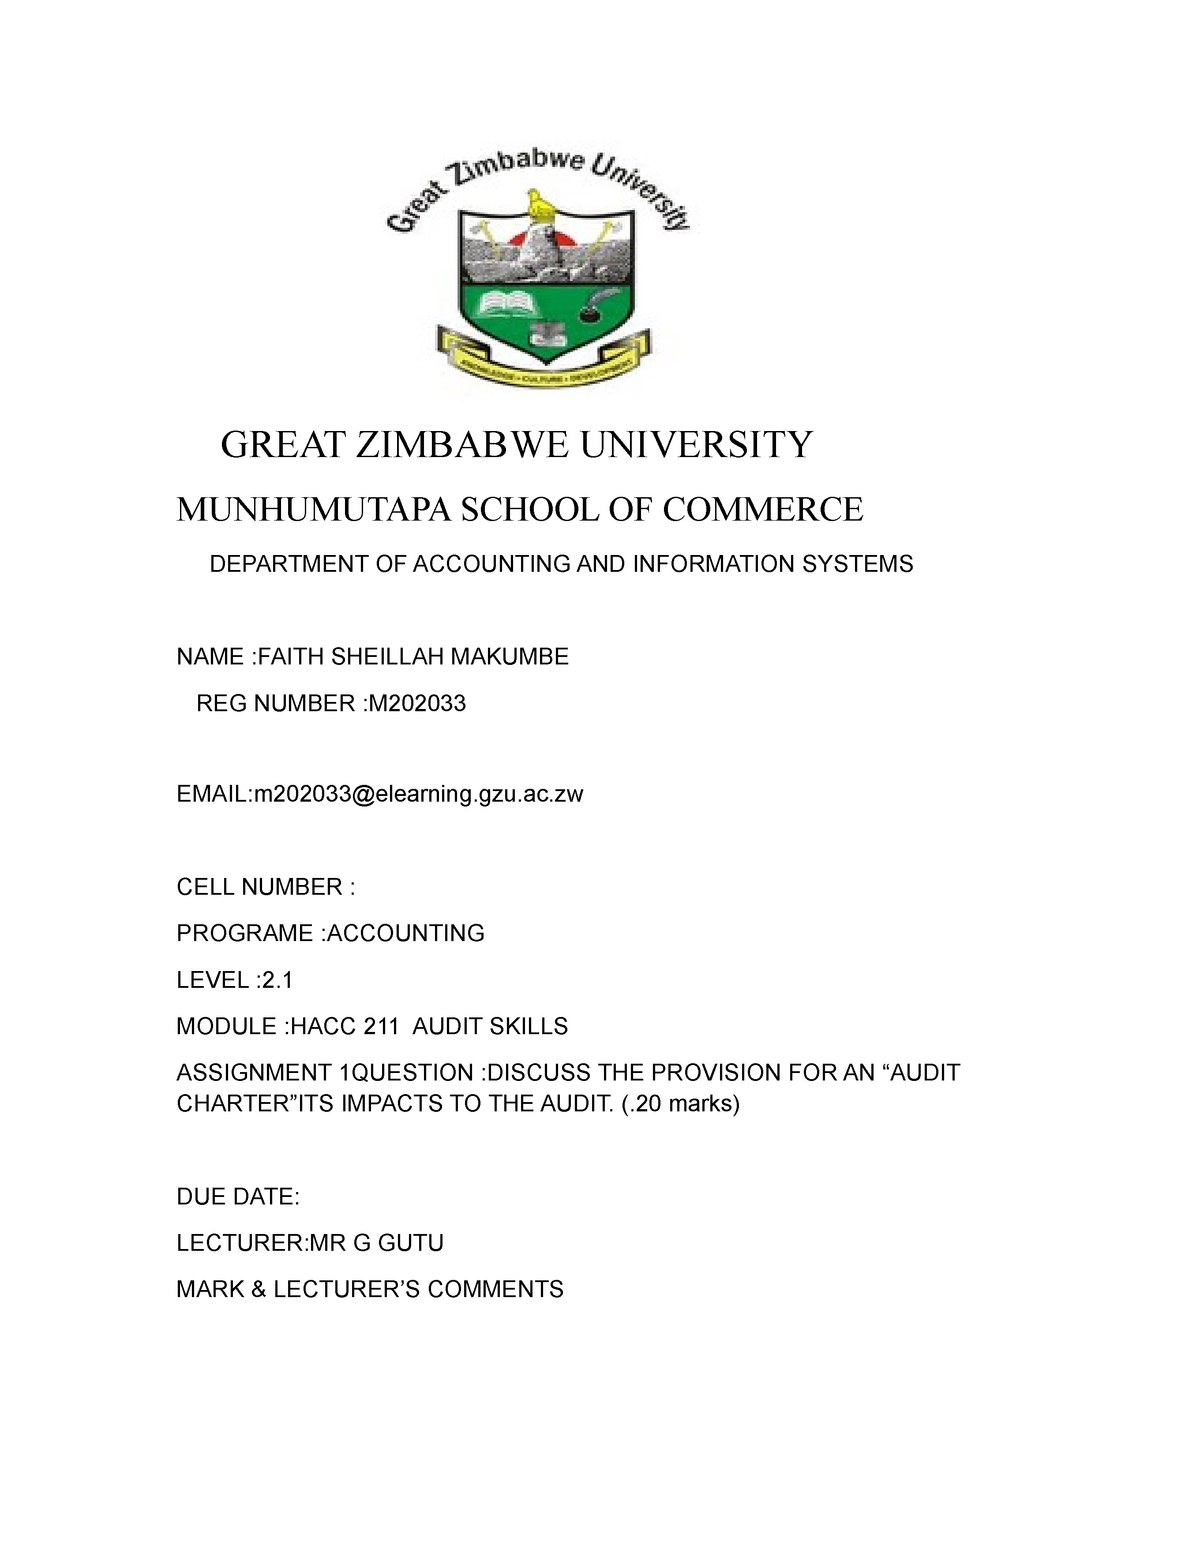 gzu accounting dissertations